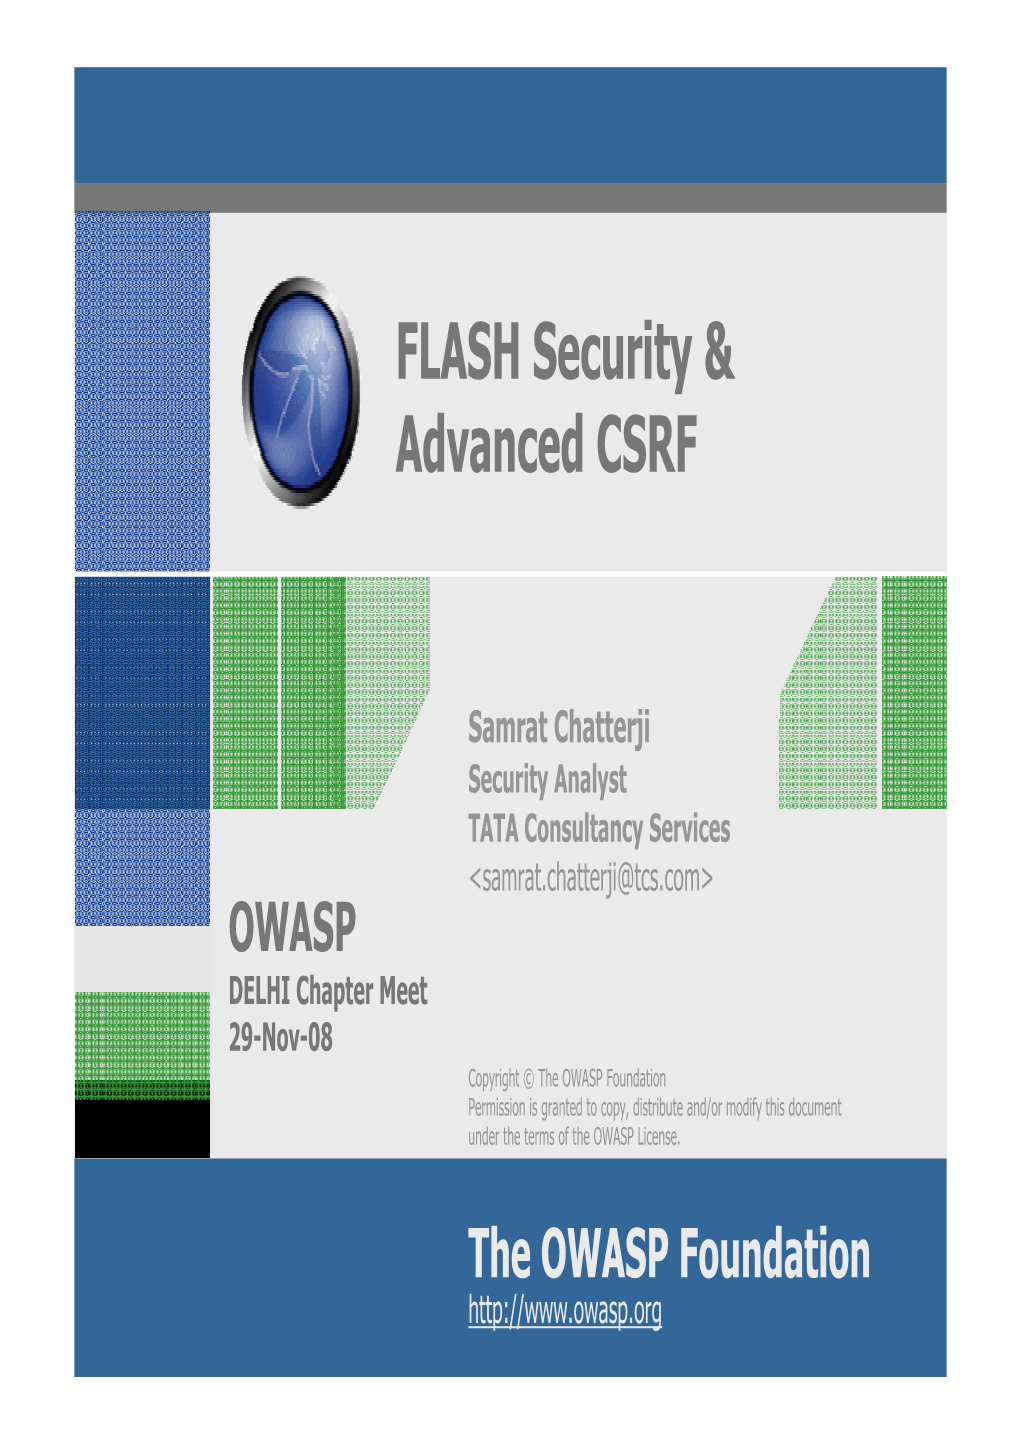 FLASH Security & Advanced CSRF